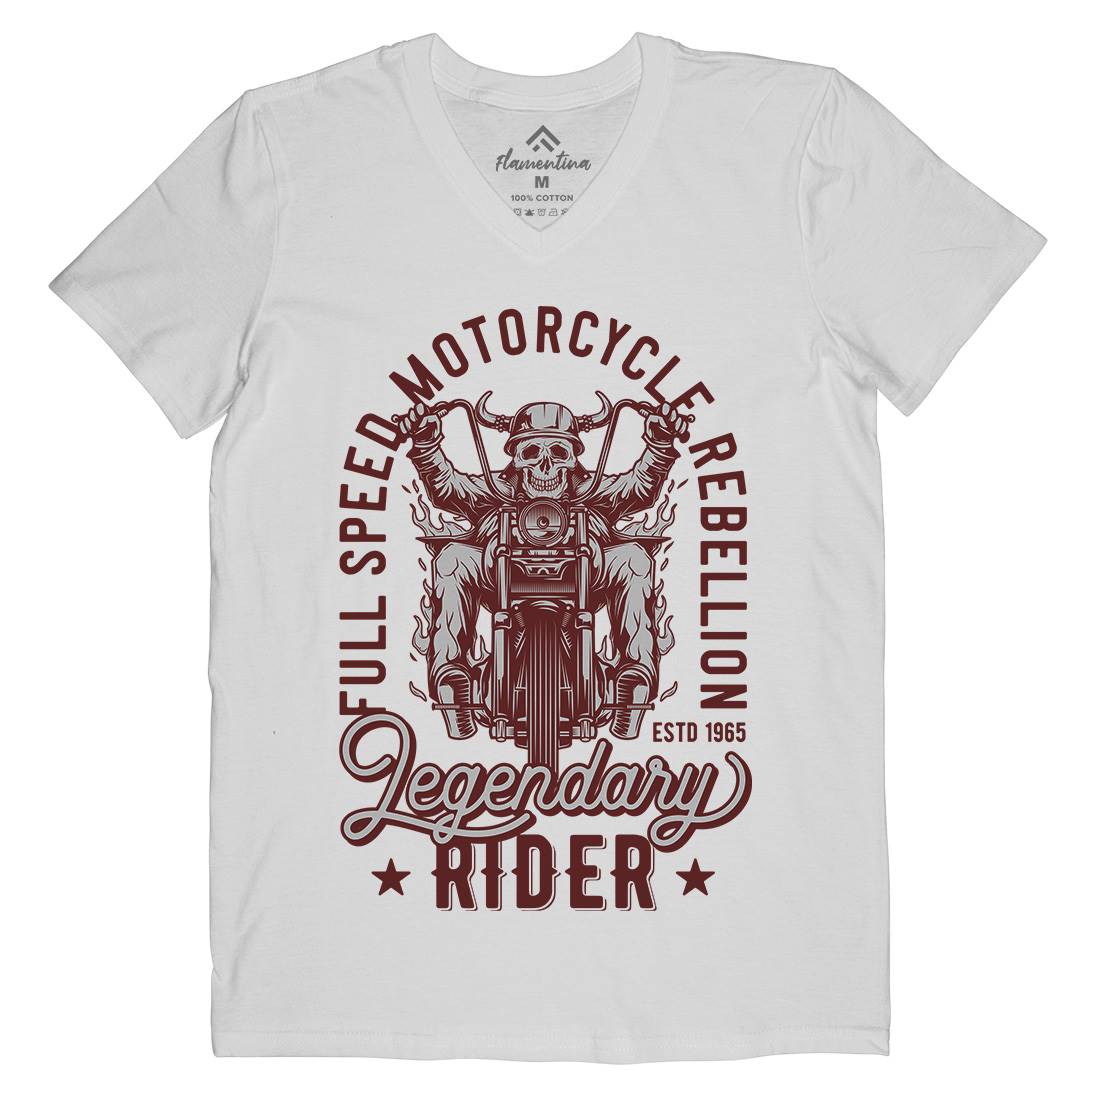 Legendary Mens Organic V-Neck T-Shirt Motorcycles B856